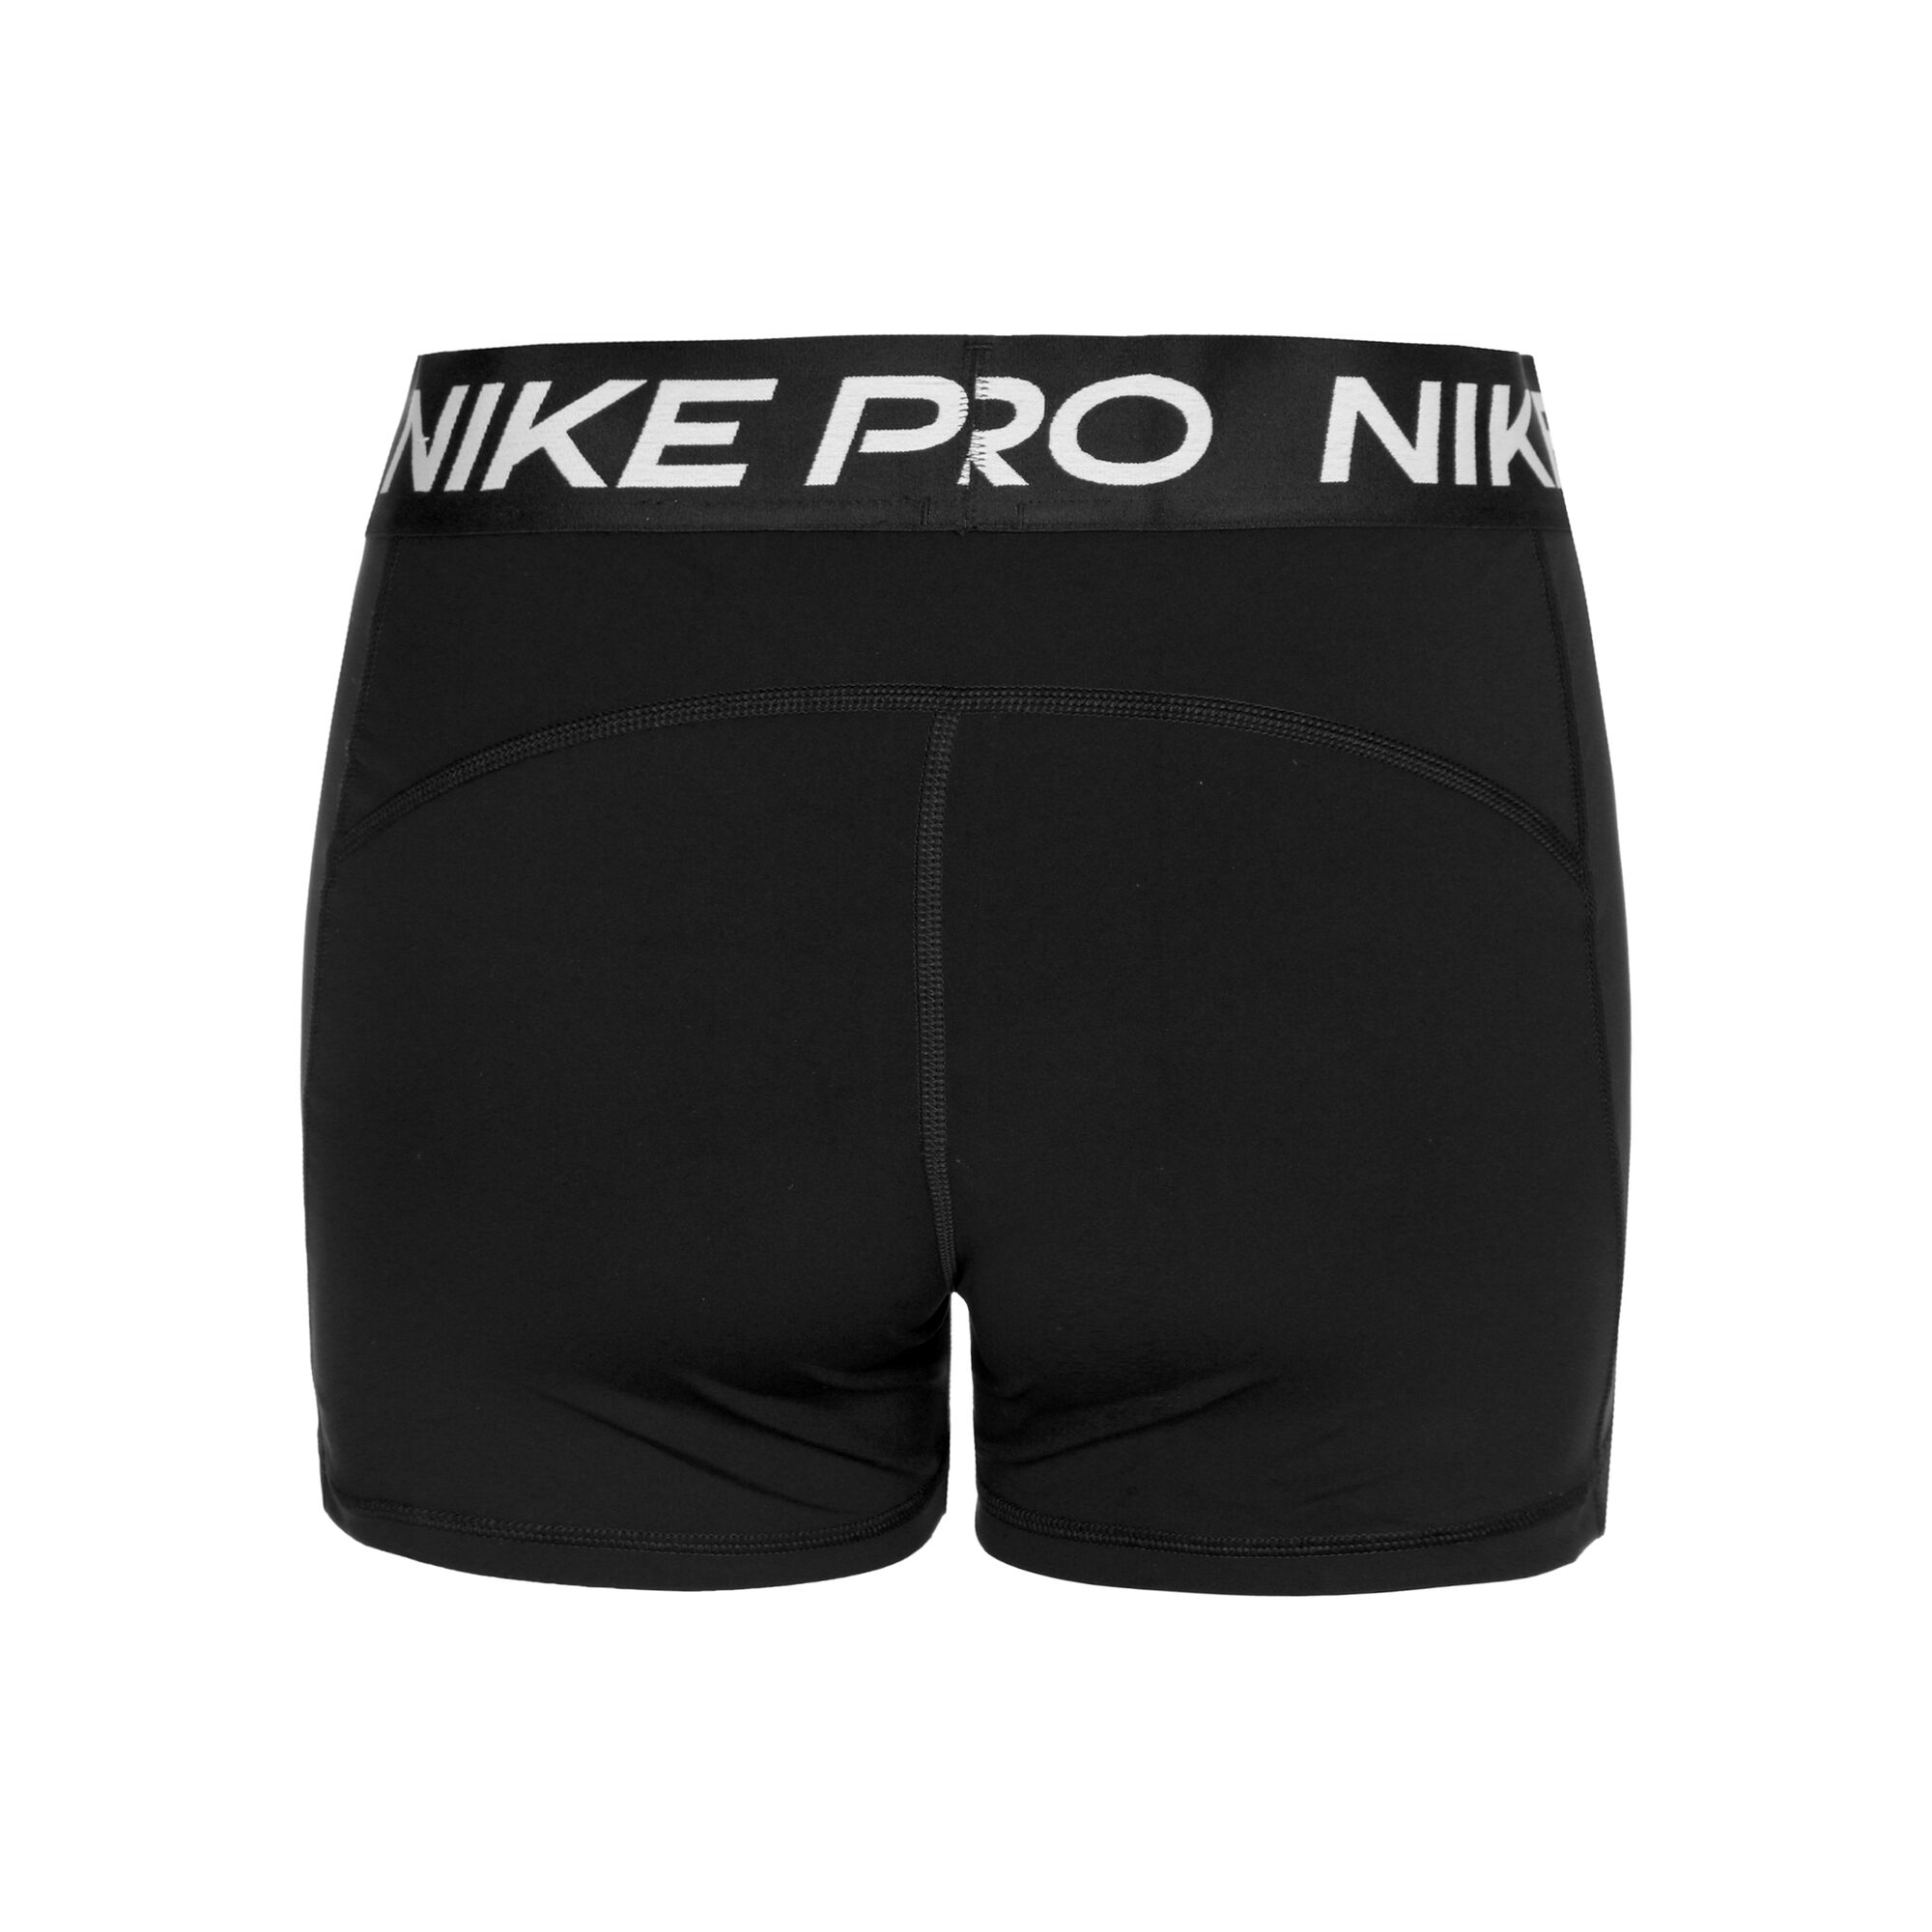 NIKE PRO [S] Women's 3.0 COMPRESSION Training Shorts-Black/Mezzo  744833-133 – VALLEYSPORTING